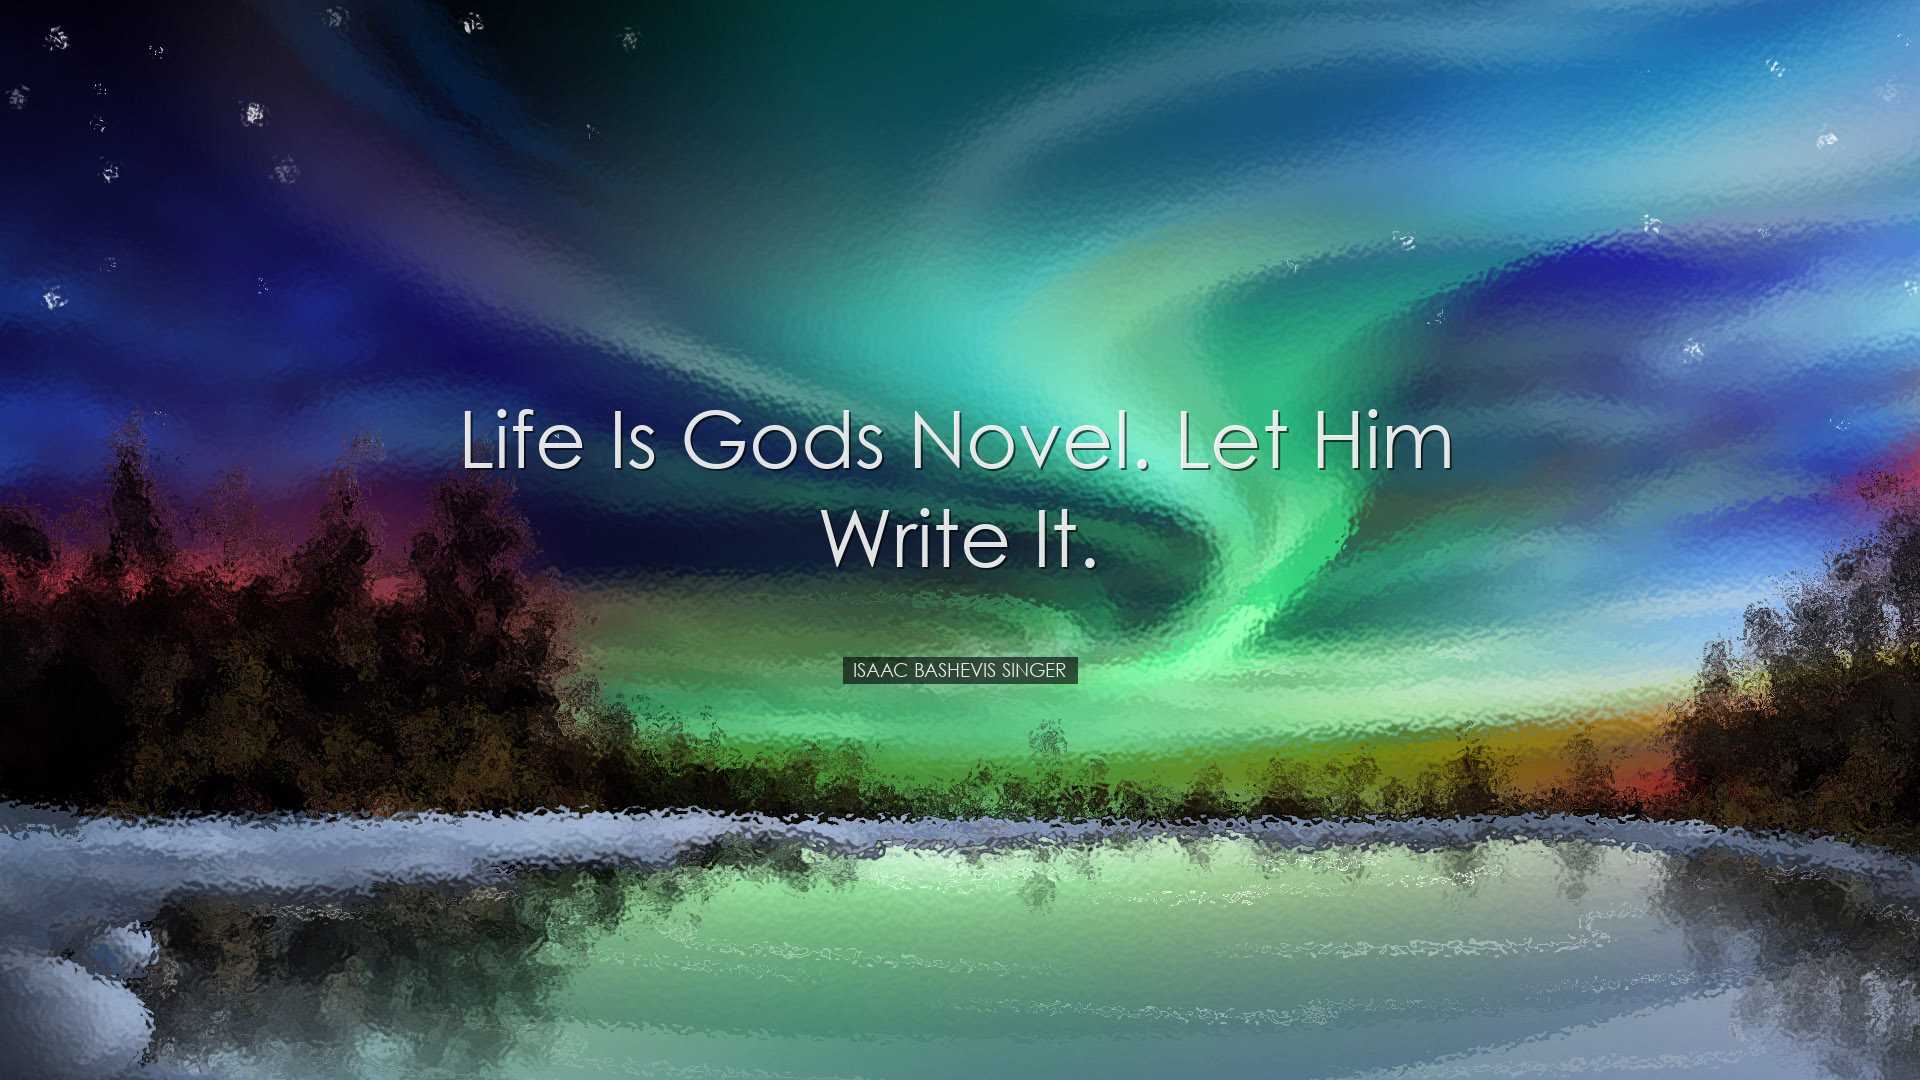 Life is Gods novel. Let him write it. - Isaac Bashevis Singer